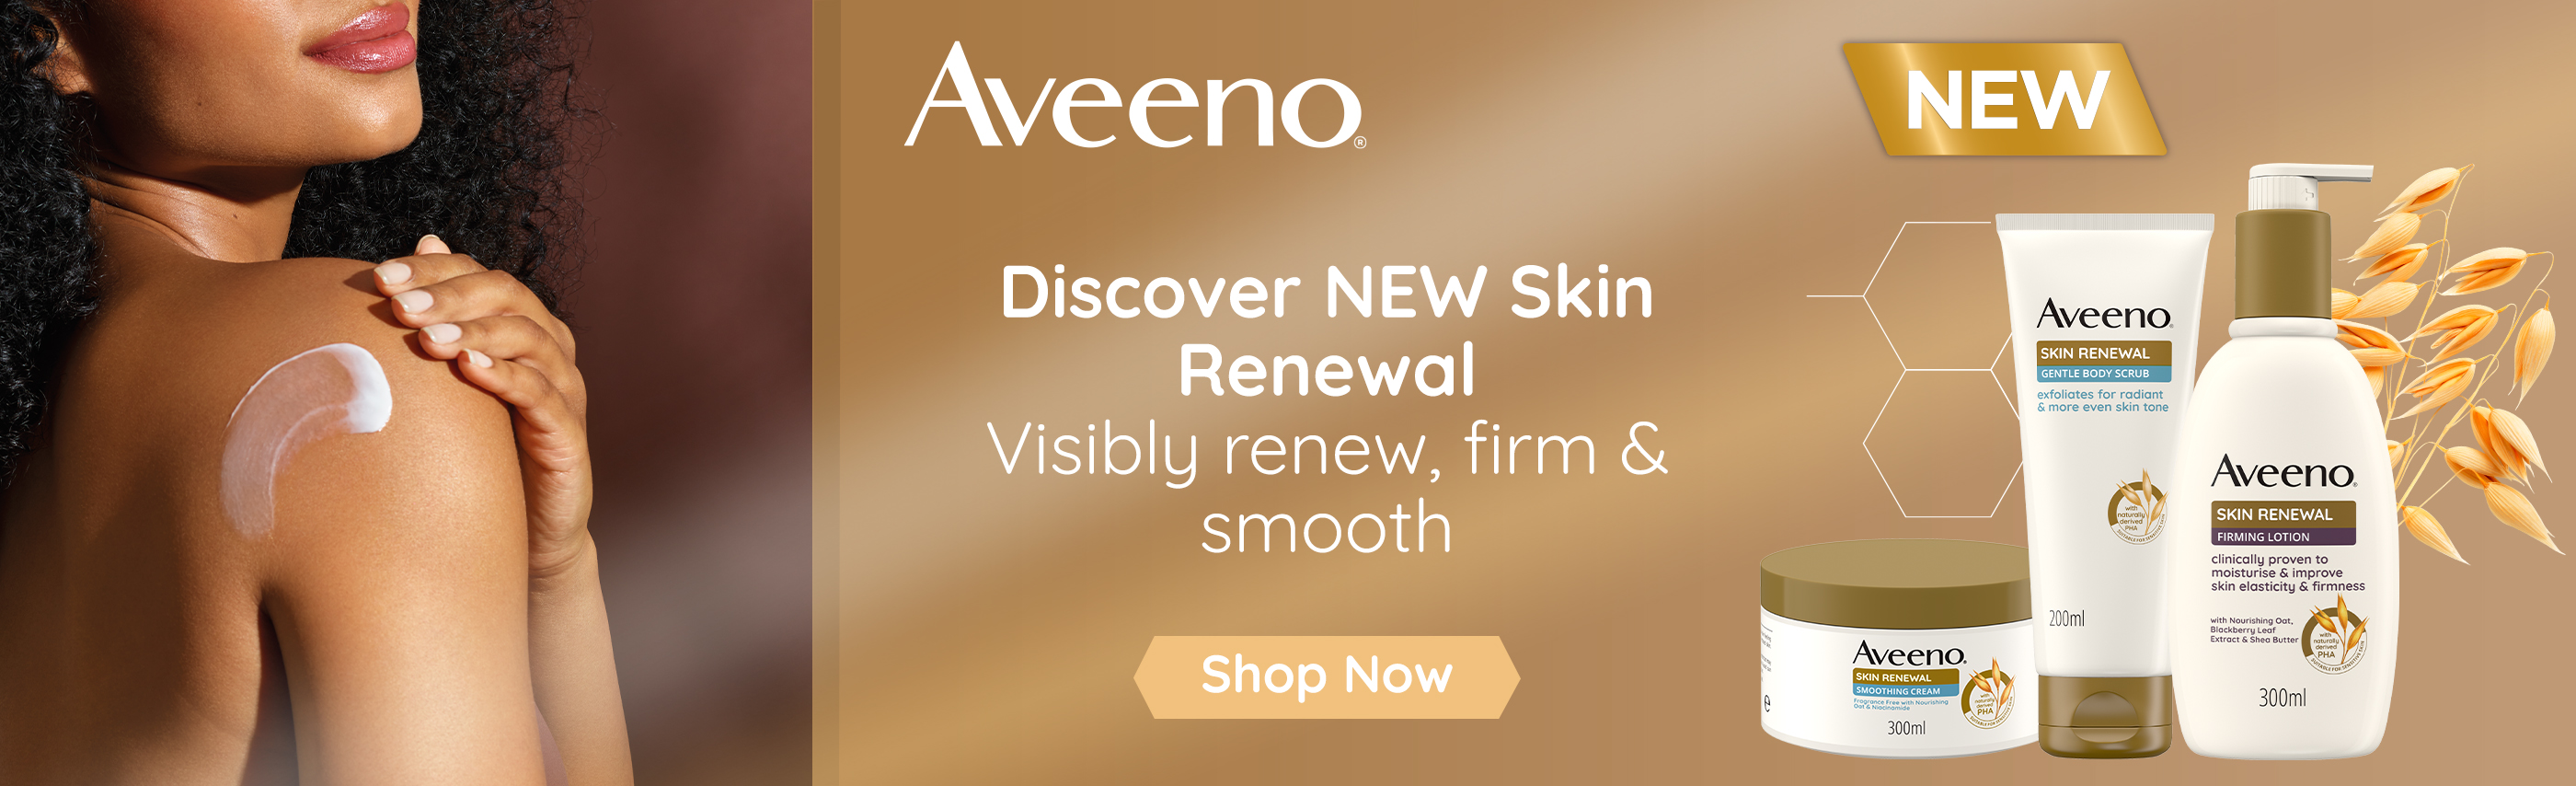 Aveeno Discover New Skin Renewal